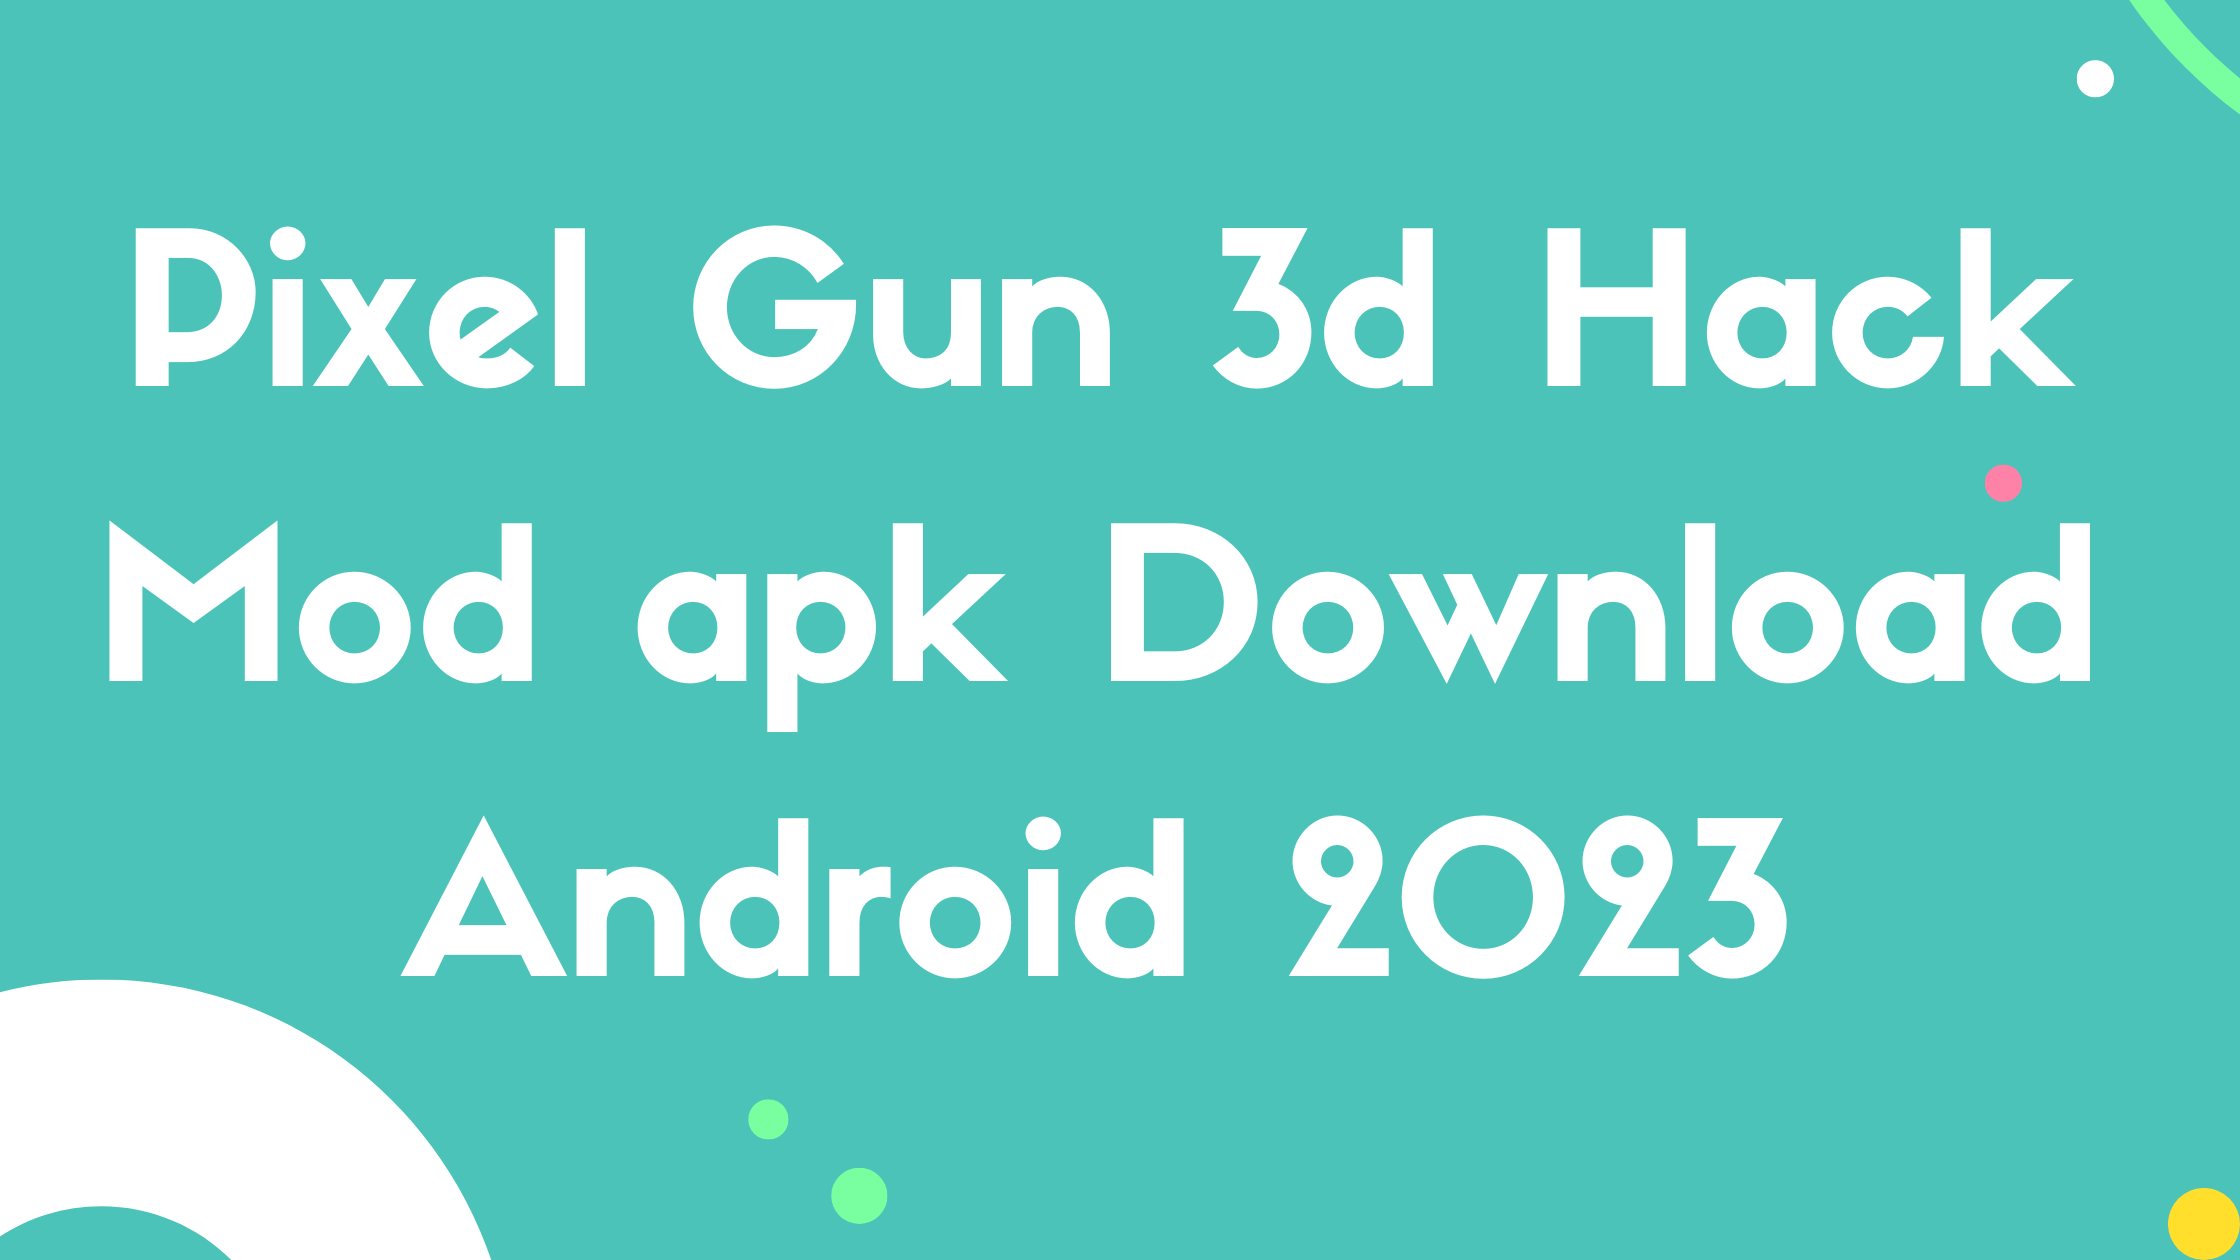 Pixel Gun 3d Hack Mod apk Download Android 2023